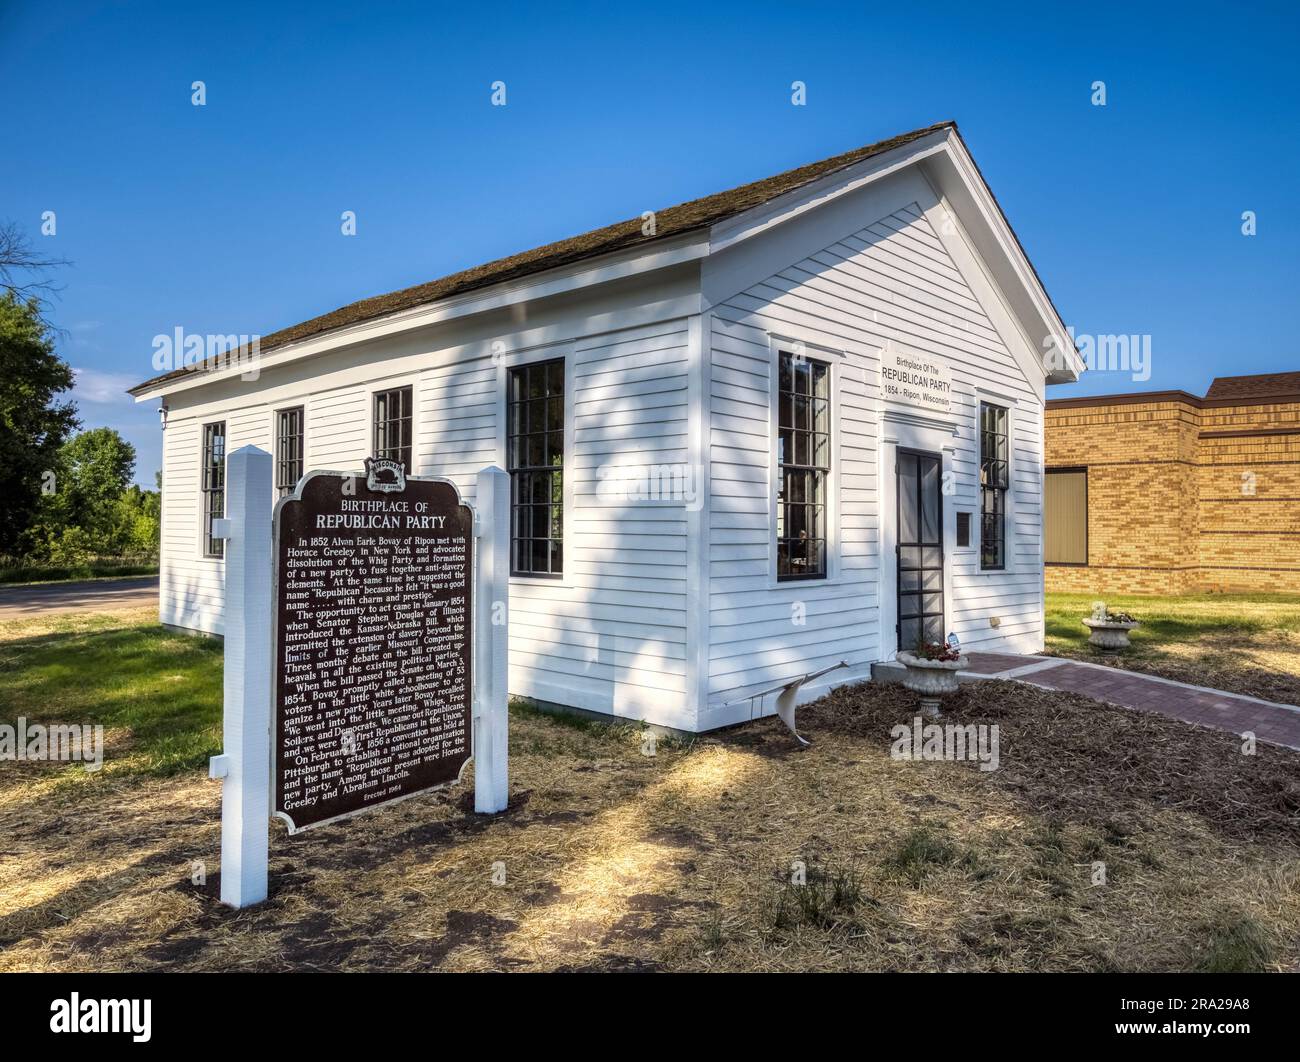 The Little White Schoolhouse der Geburtsort des Republican Party Muweum & Legacy Center in Ripon, Wisconsin Stockfoto